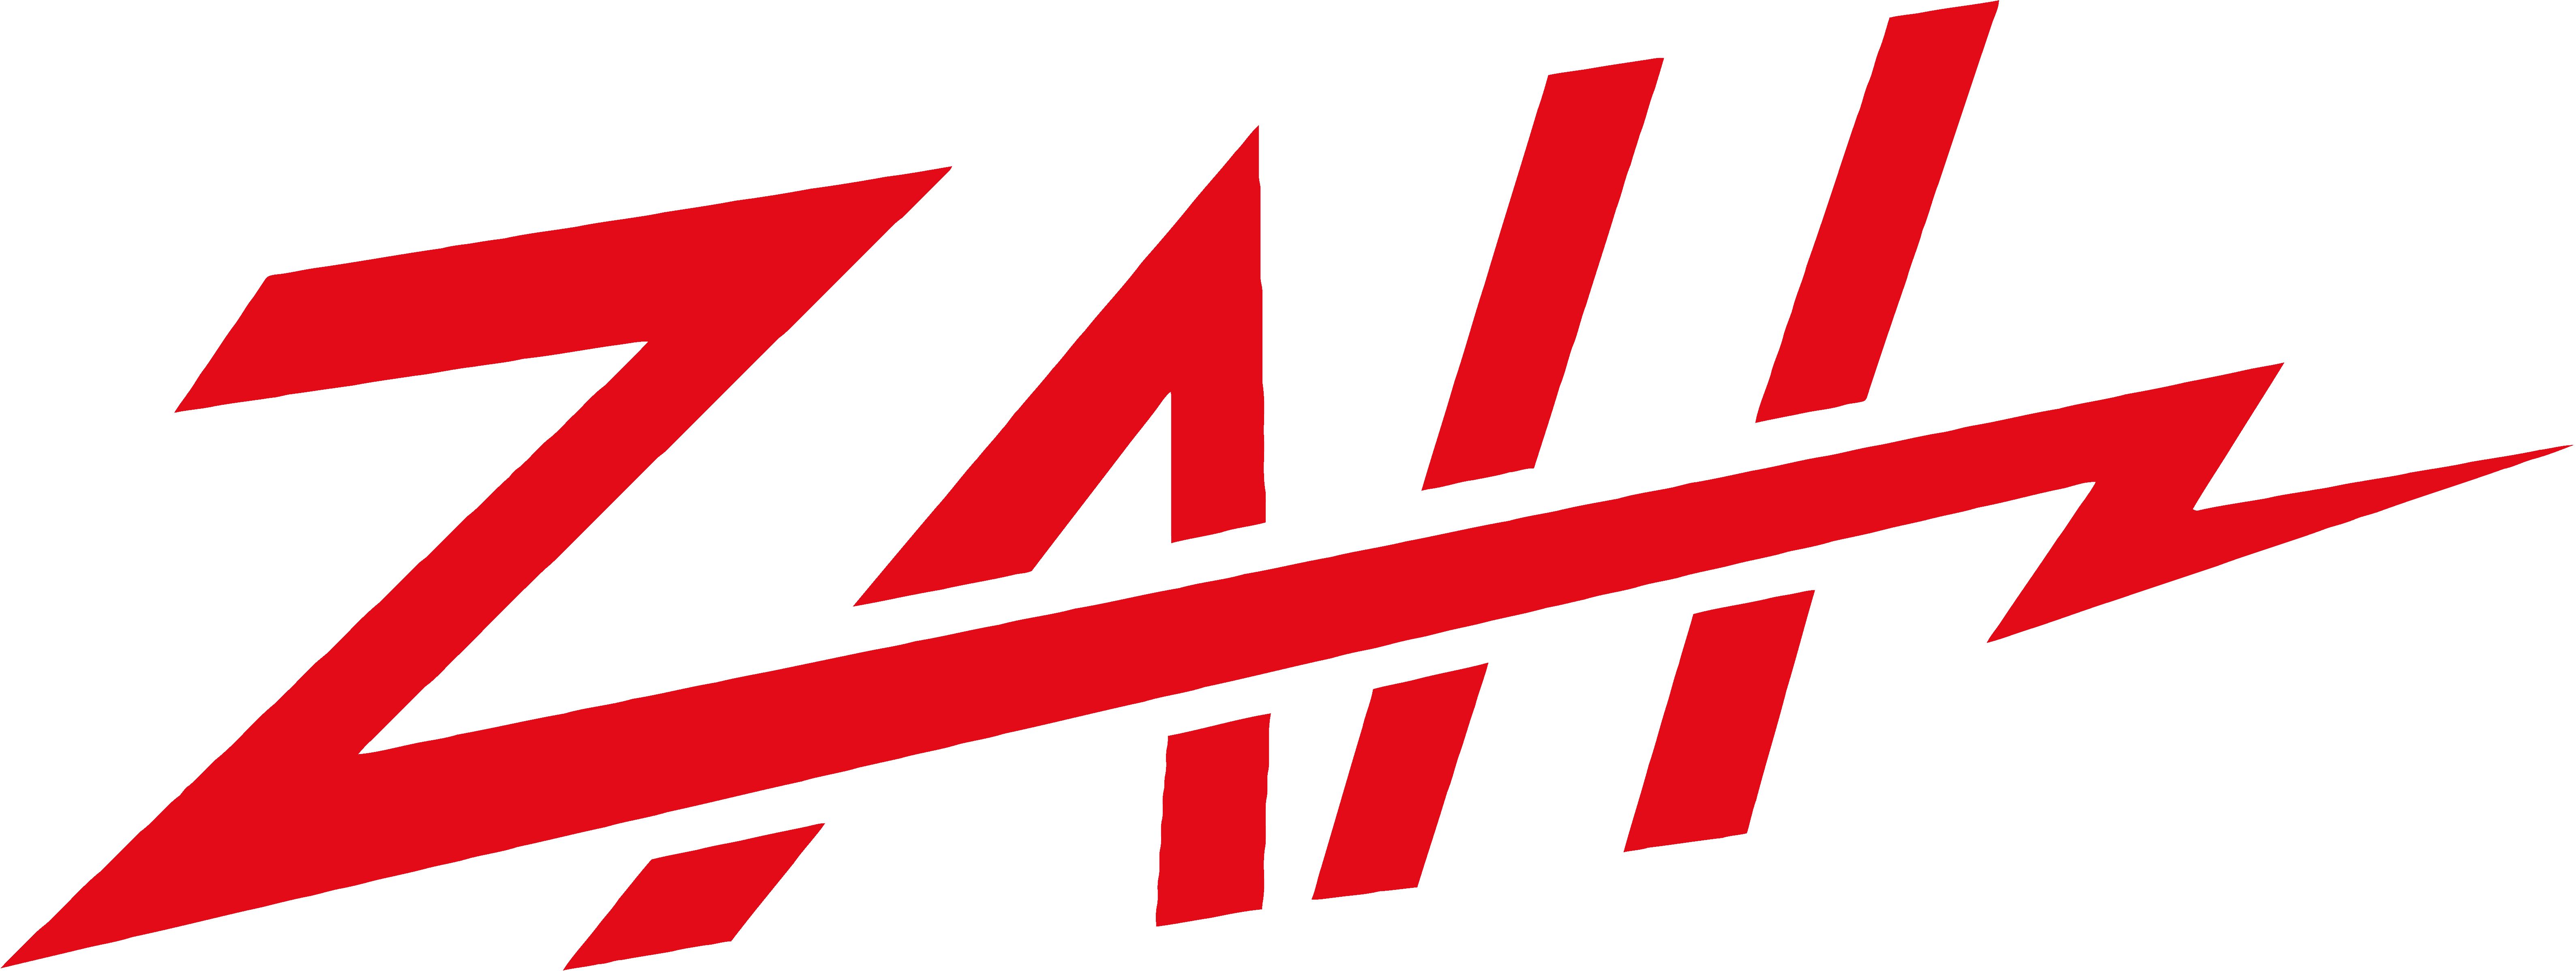 ZAH Marl